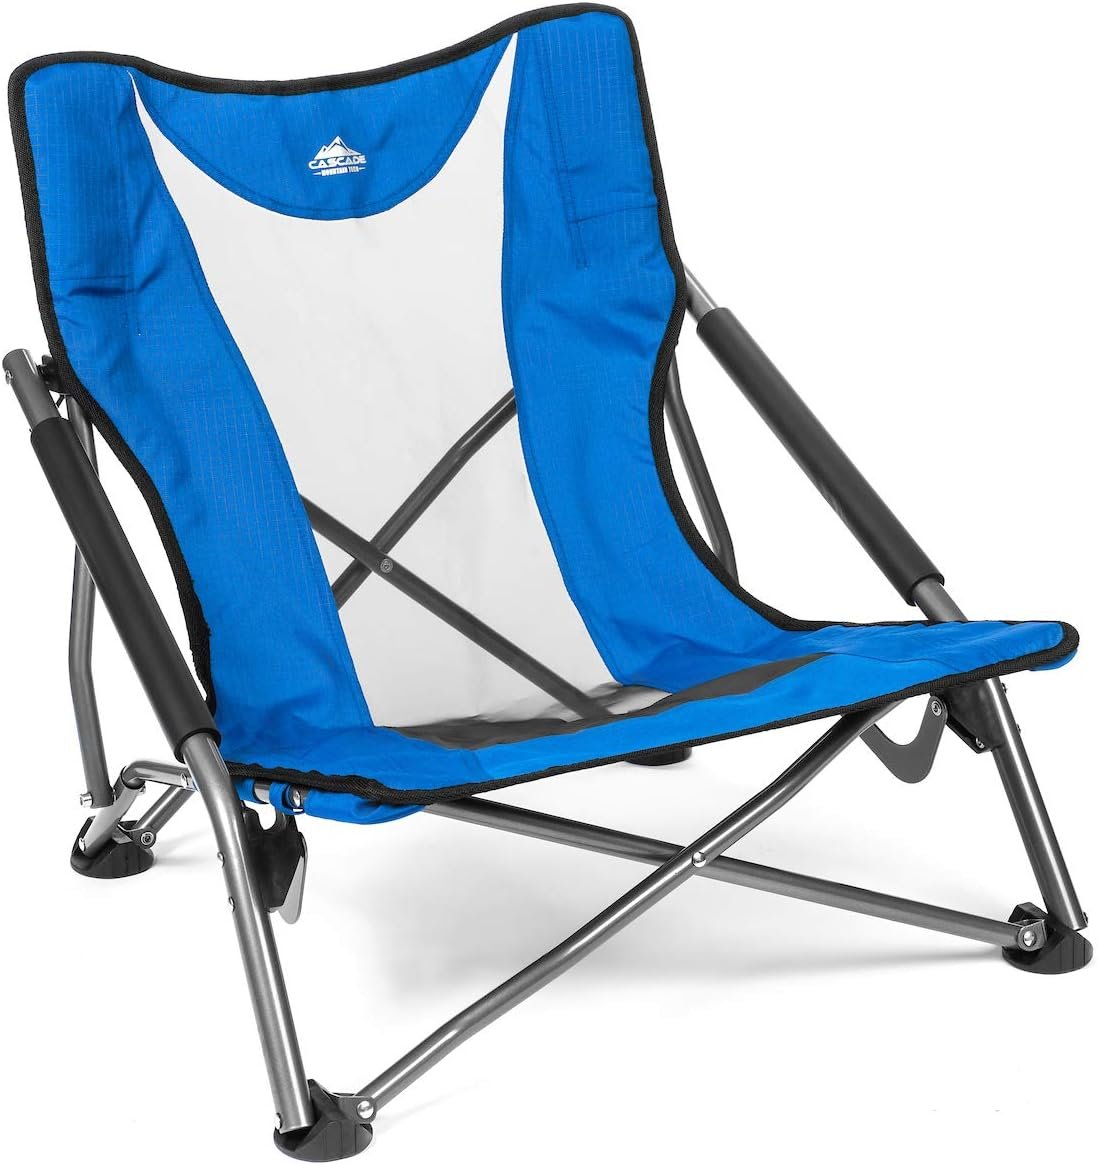 Cascade Mountain Tech Low Profile Royal Blue Camp Chair Review